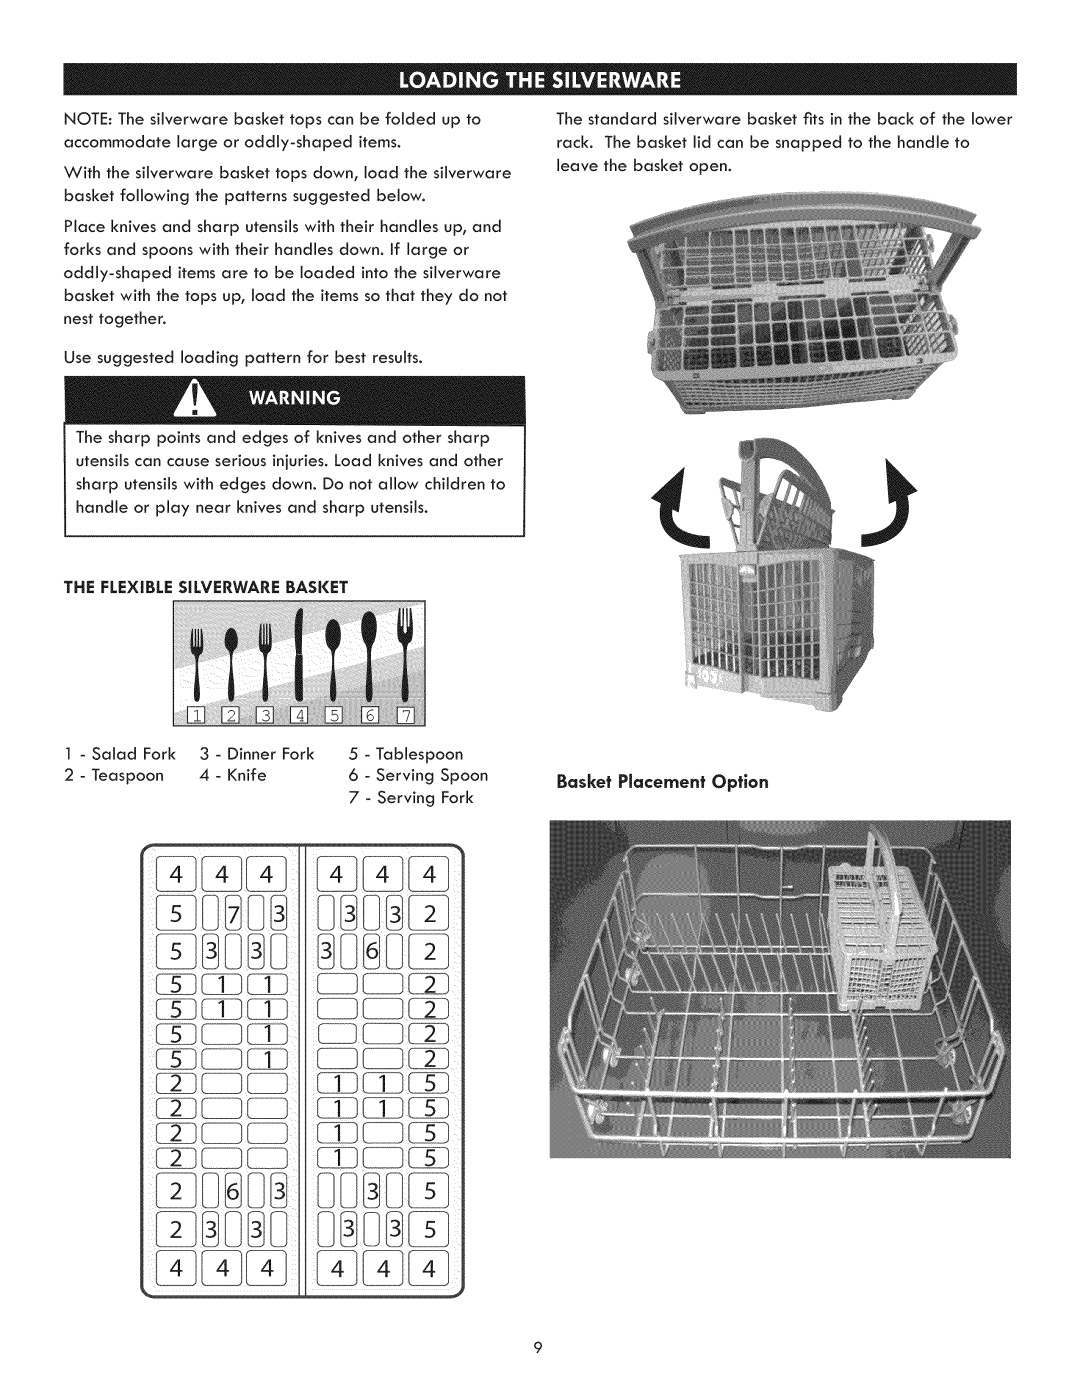 Kenmore 630.1390, 630.1391 manual The Flexible Silverware Basket, Basket Placement Option 